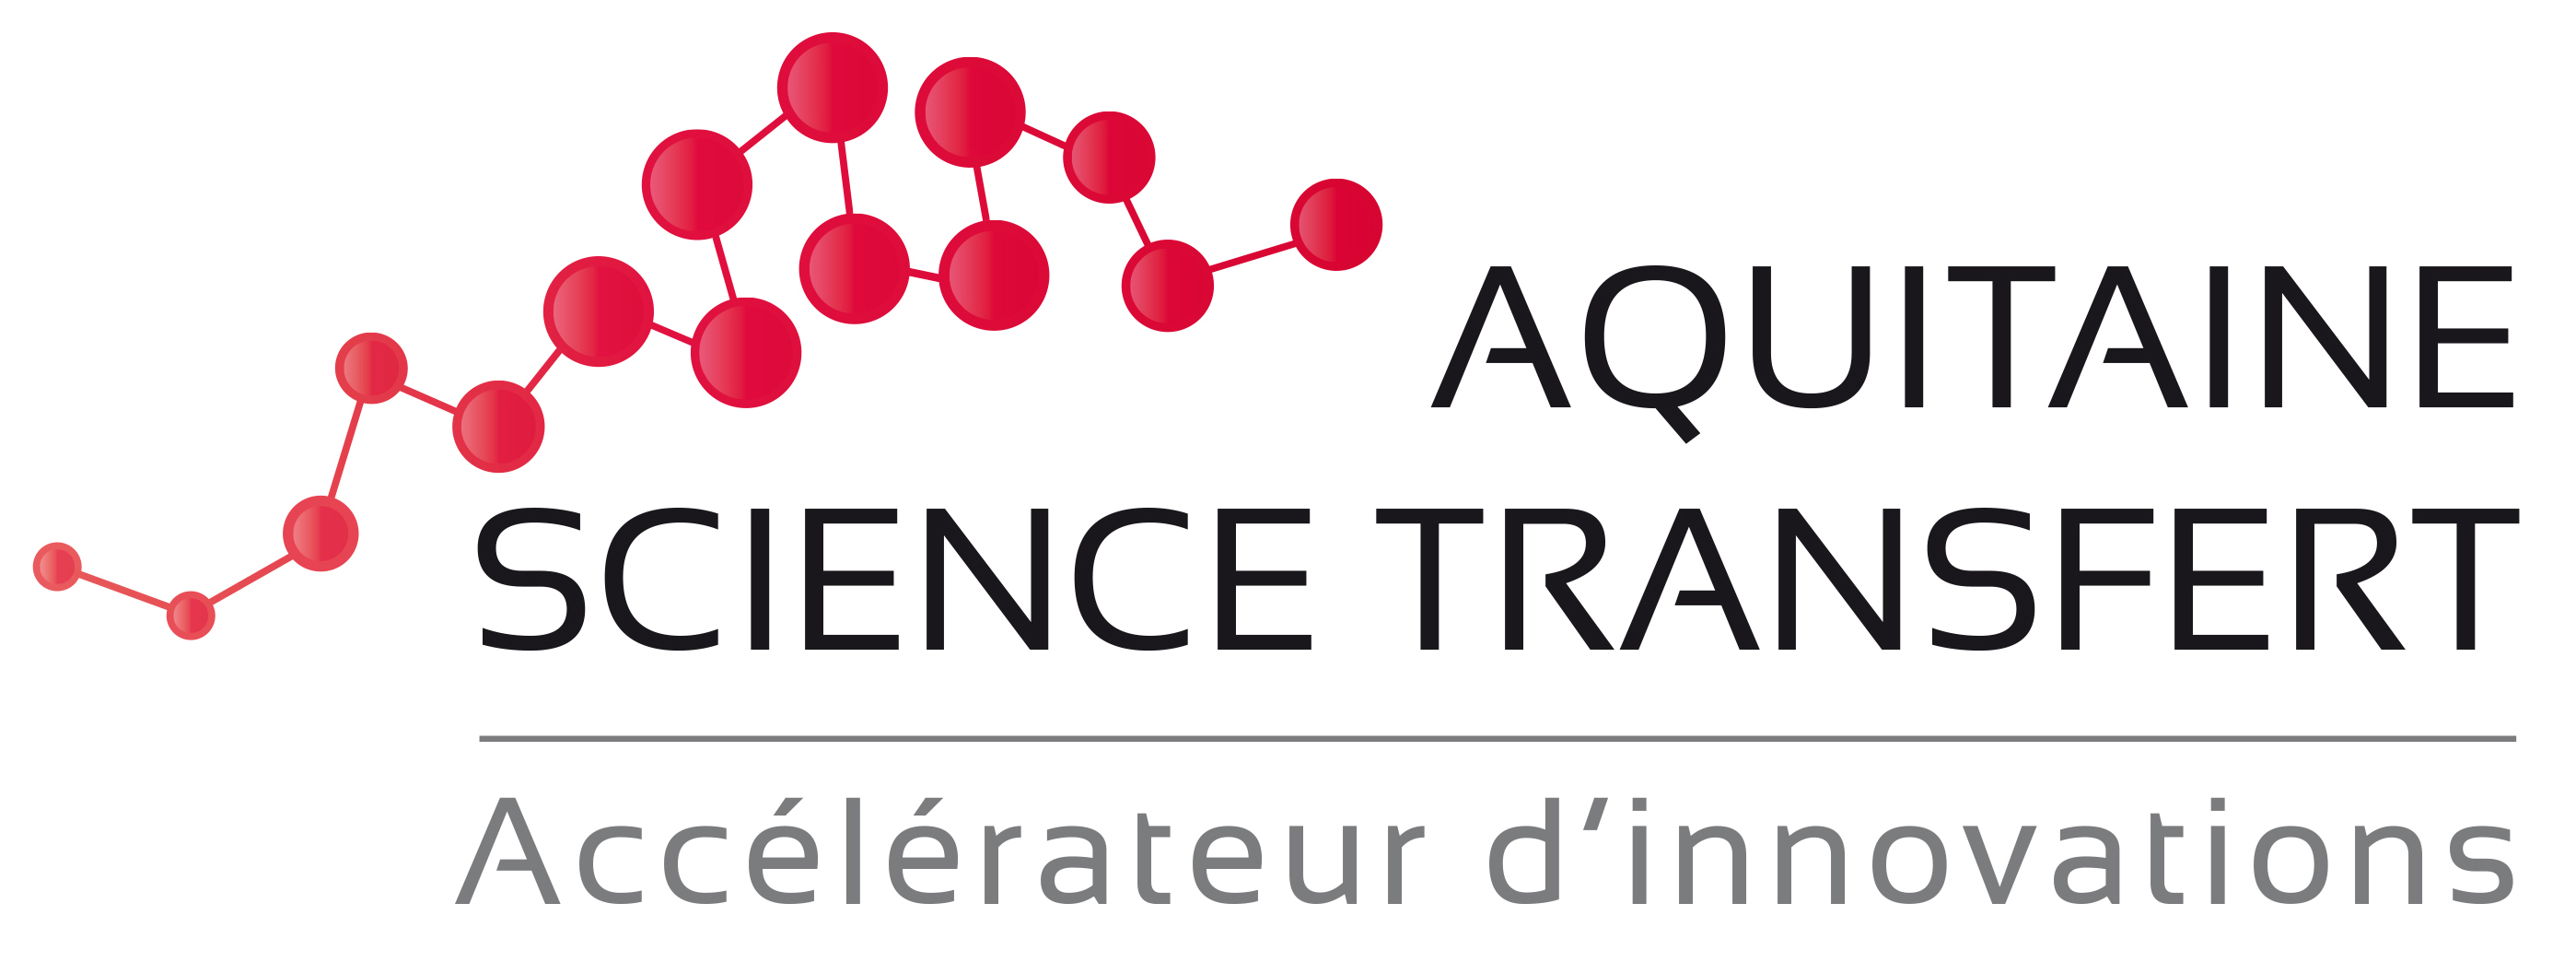 SATT Aquitaine Science Transfert